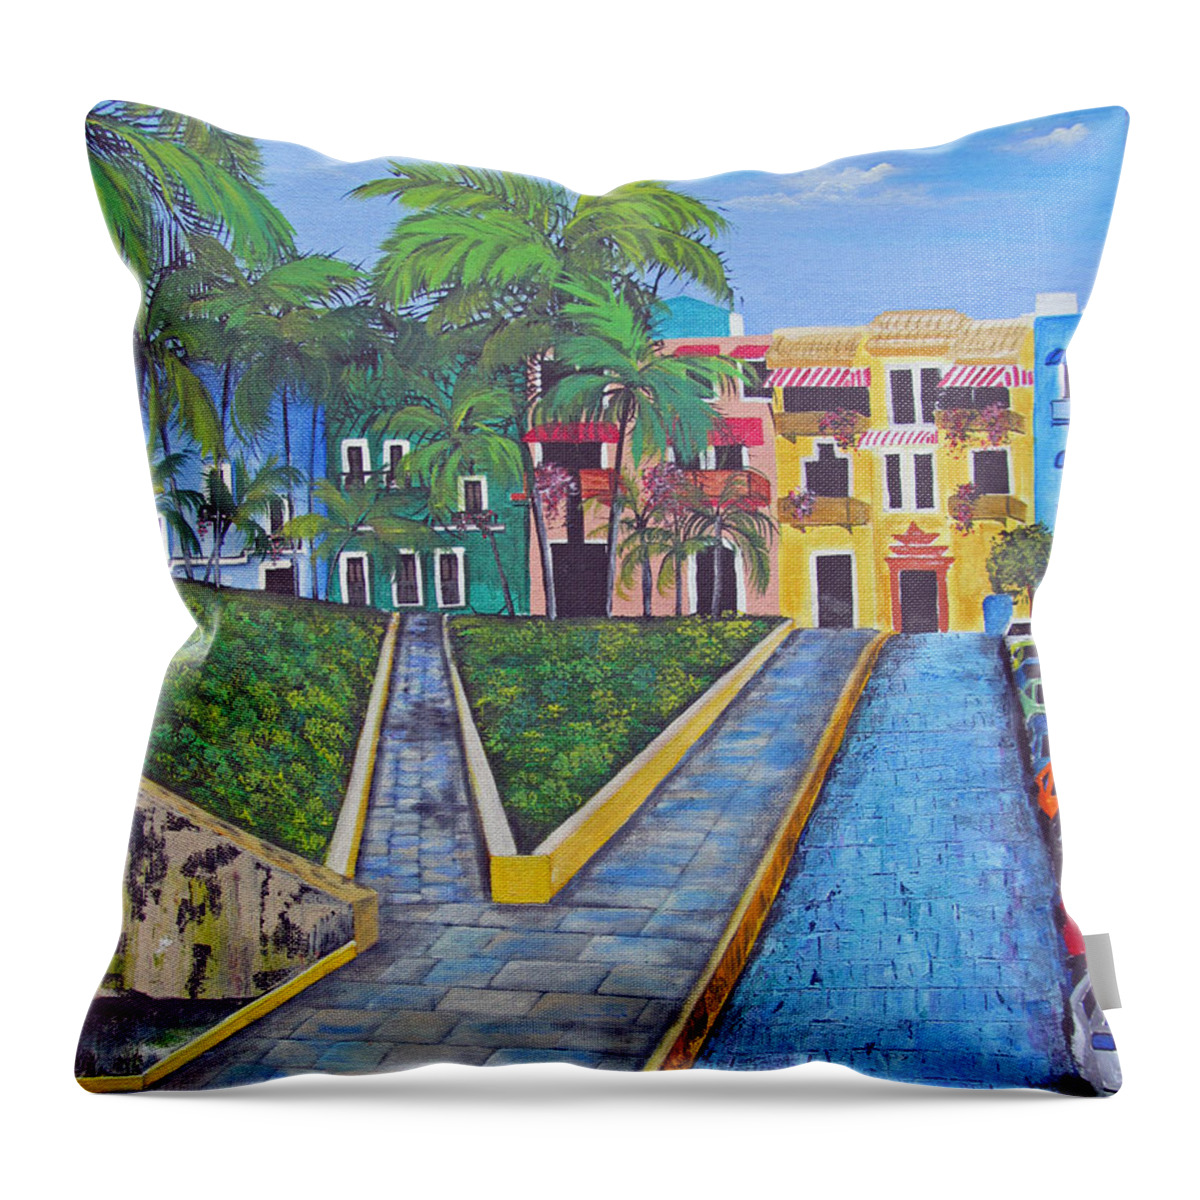 Old San Juan Throw Pillow featuring the painting Old San Juan by Gloria E Barreto-Rodriguez